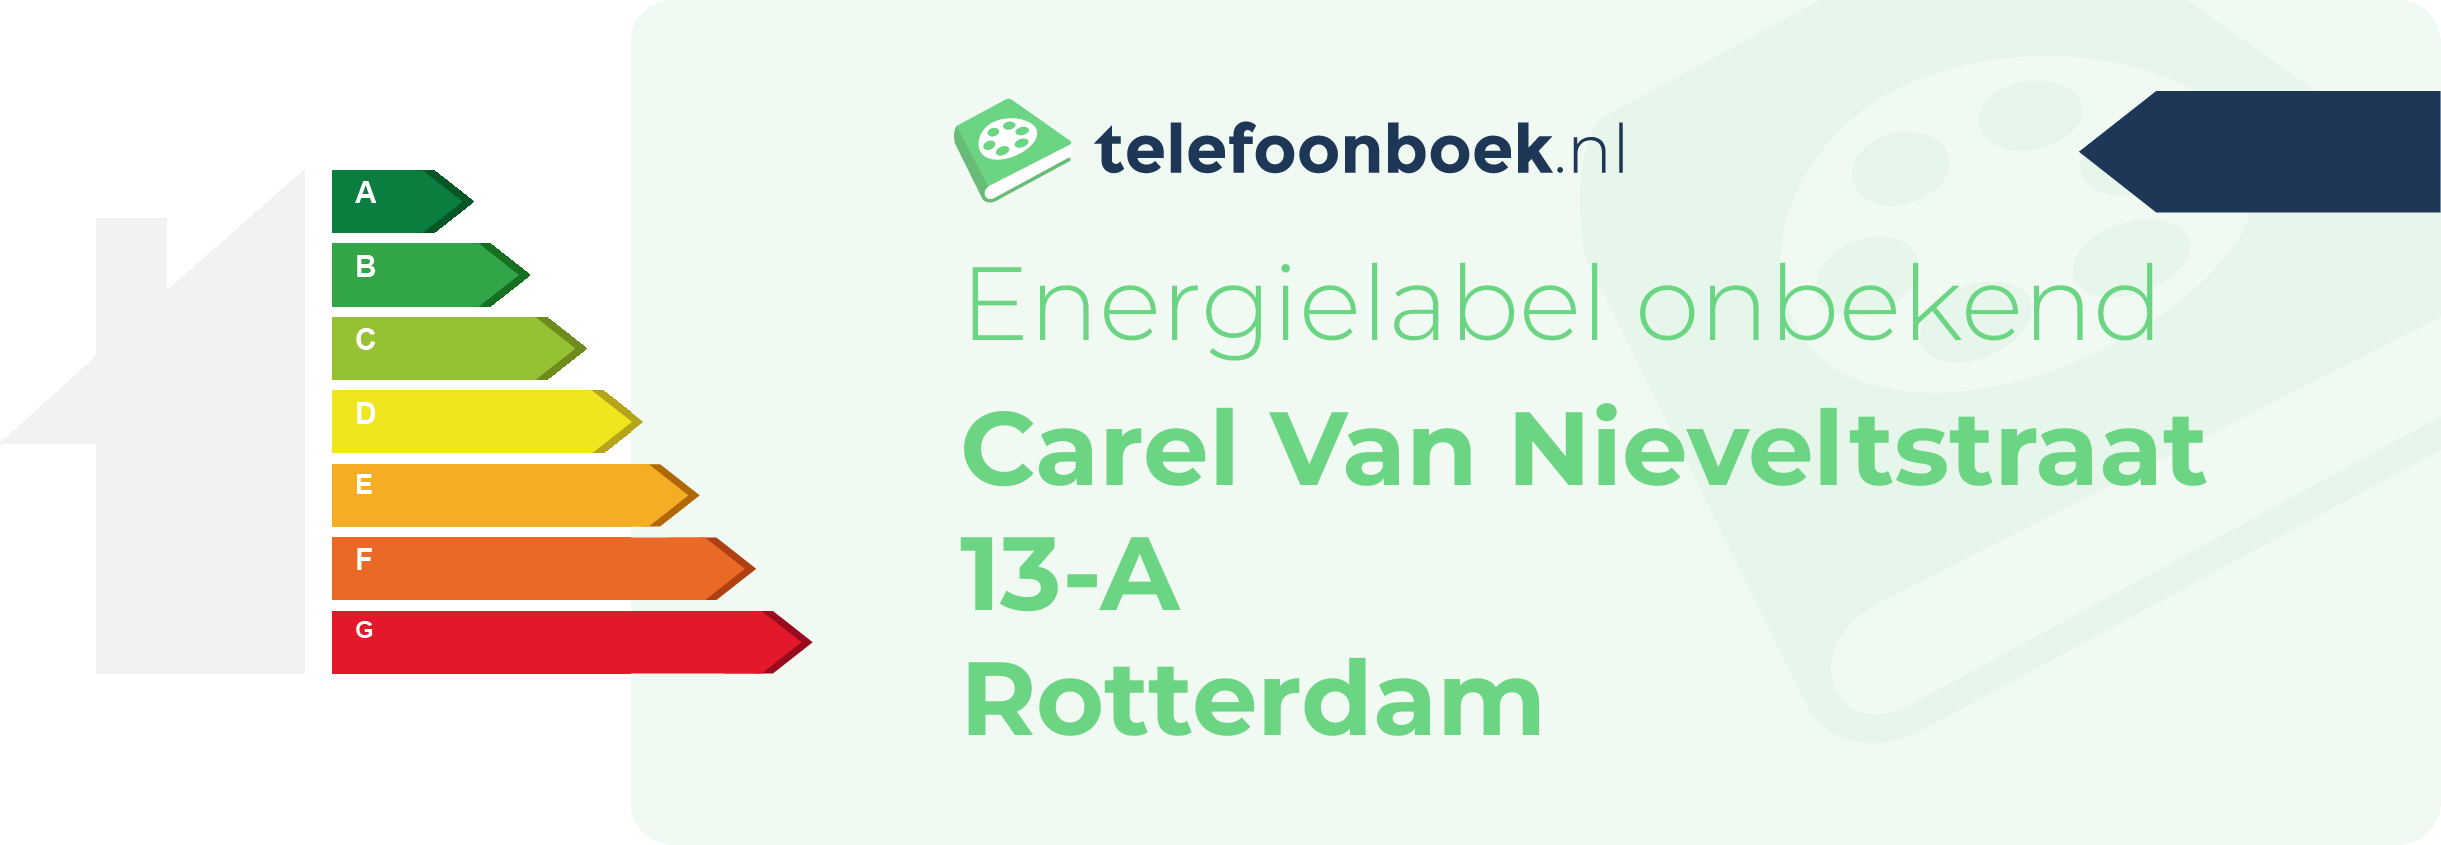 Energielabel Carel Van Nieveltstraat 13-A Rotterdam